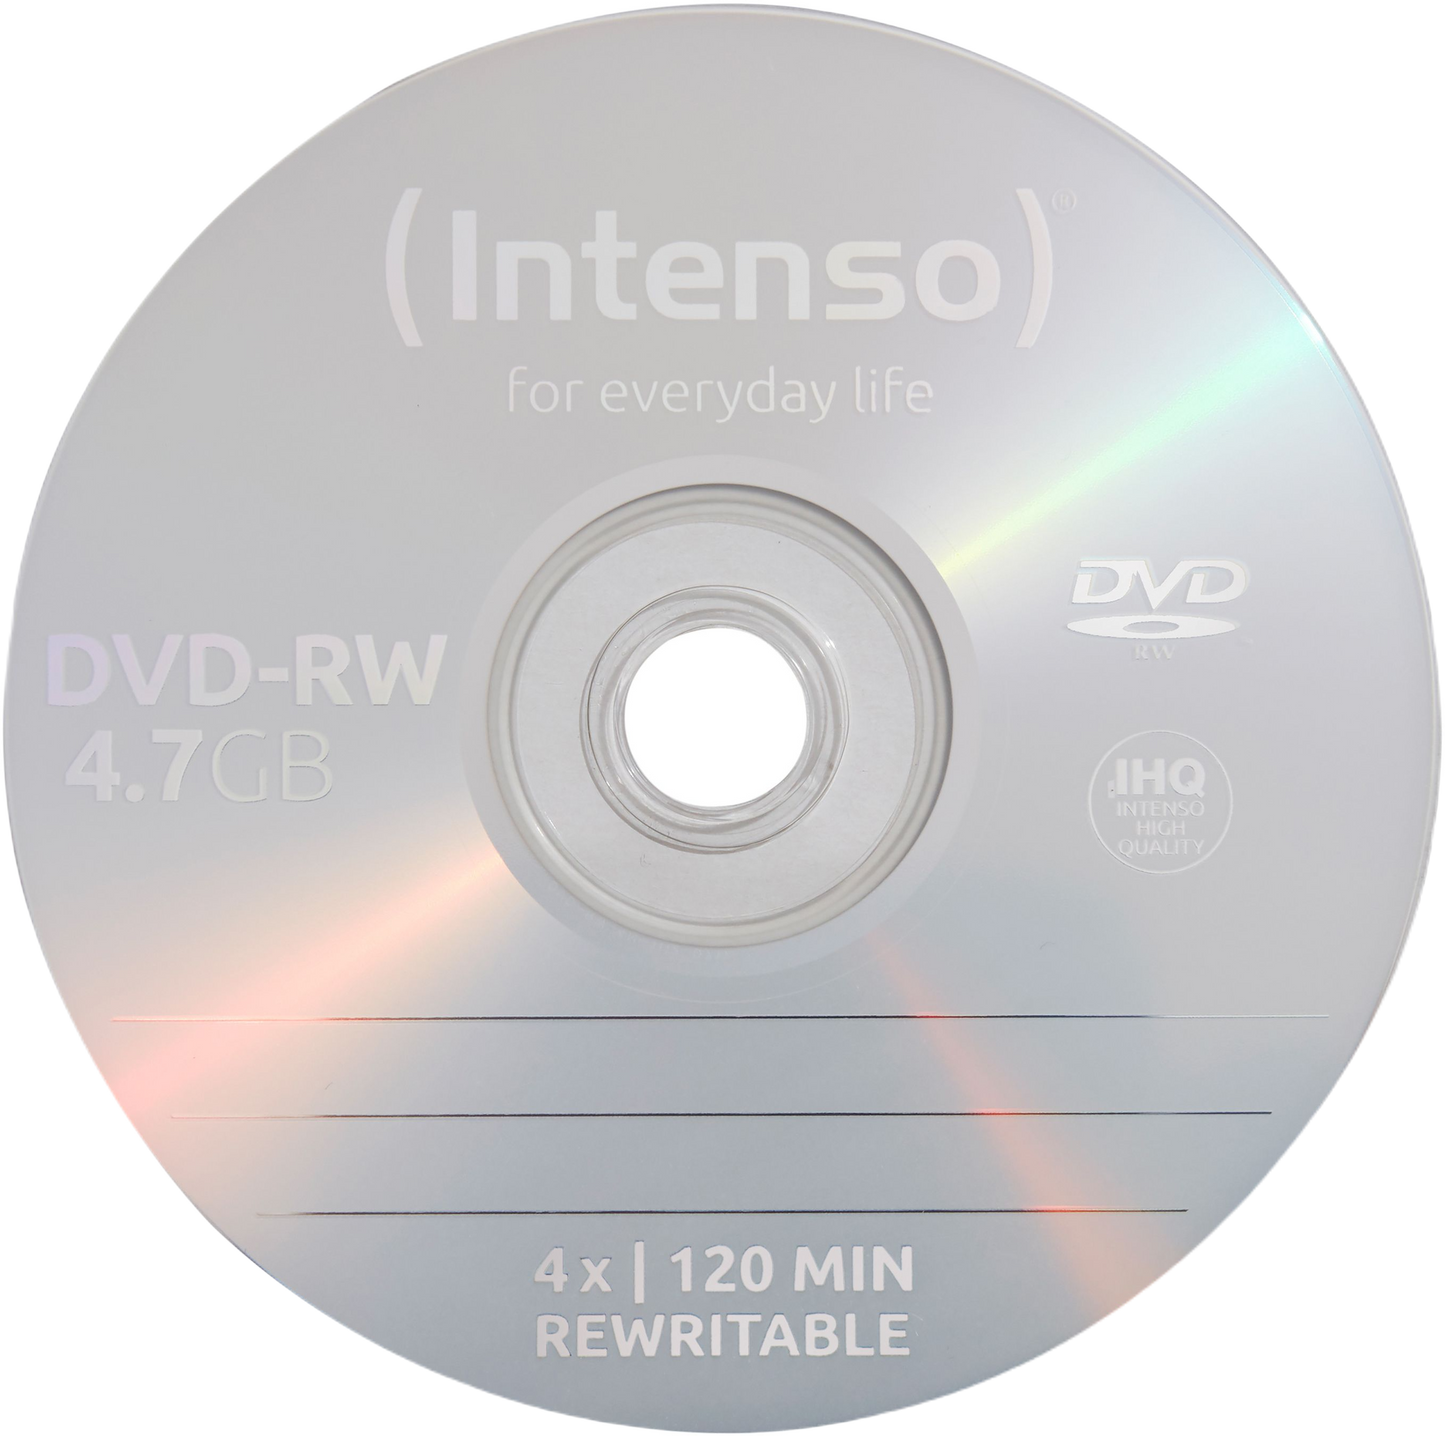 DVD+R 8.5 Gb (Boitier 5 mm) INTENSO